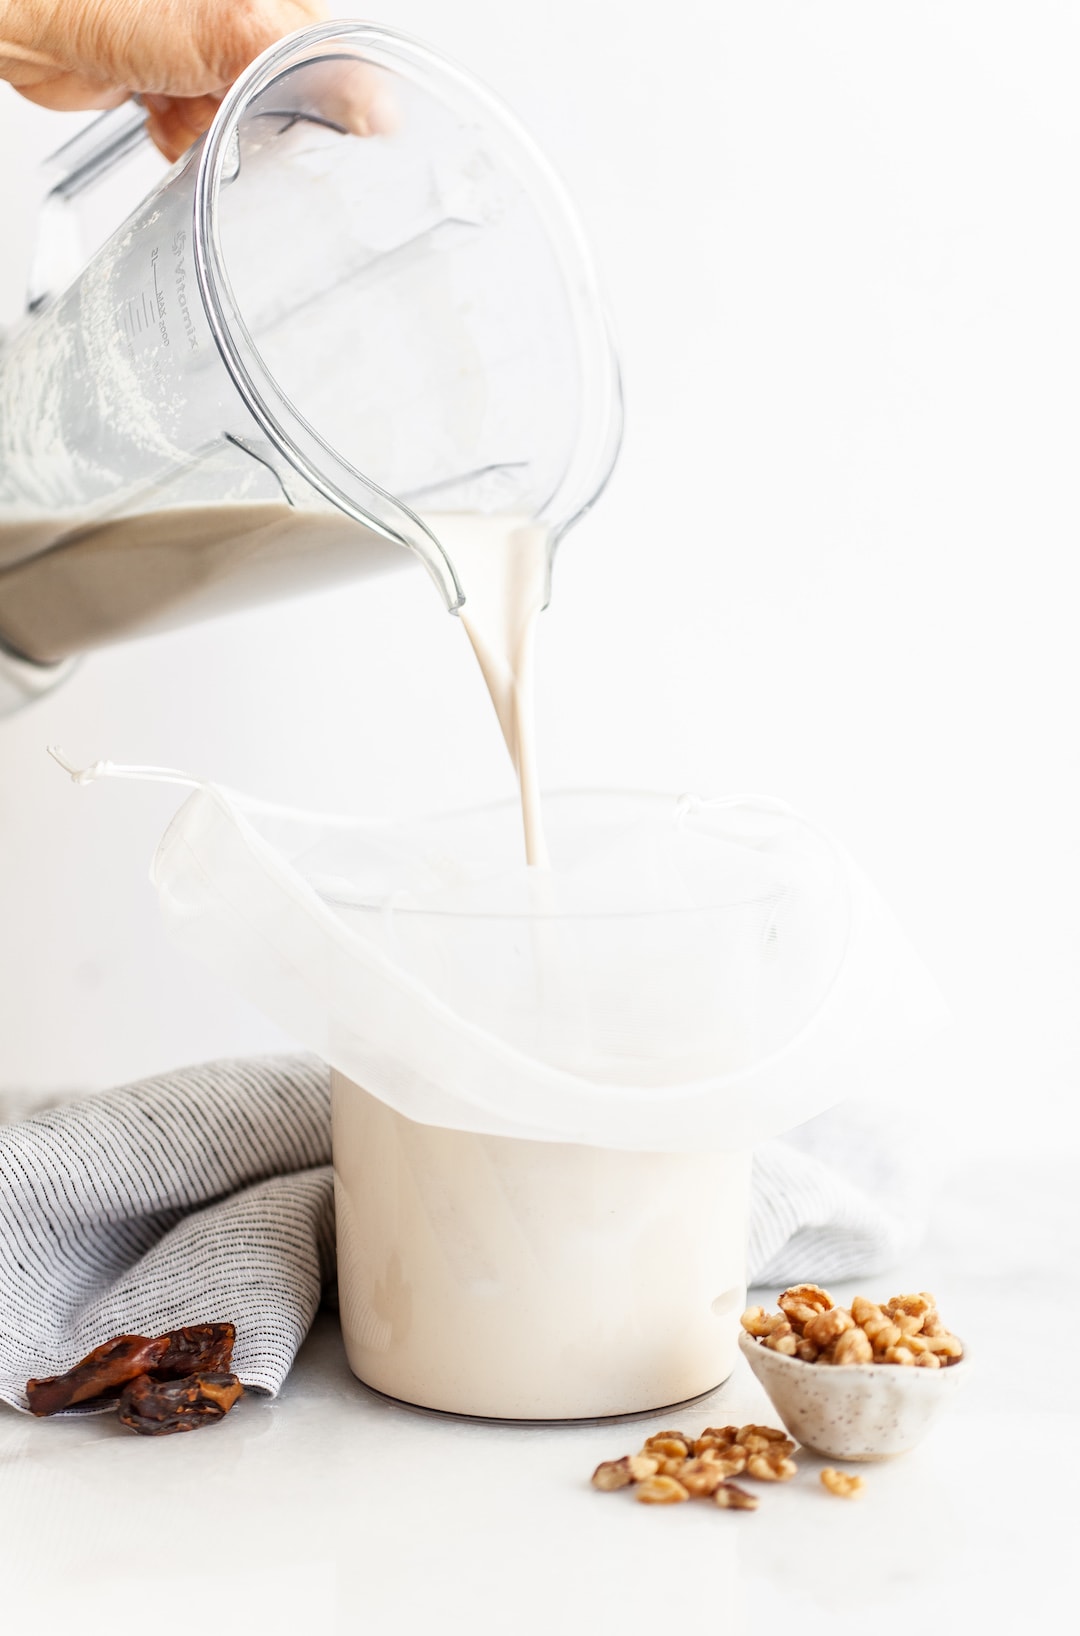 The Easiest Vitamix Walnut Milk (2 Ways!) - in a few simple steps!